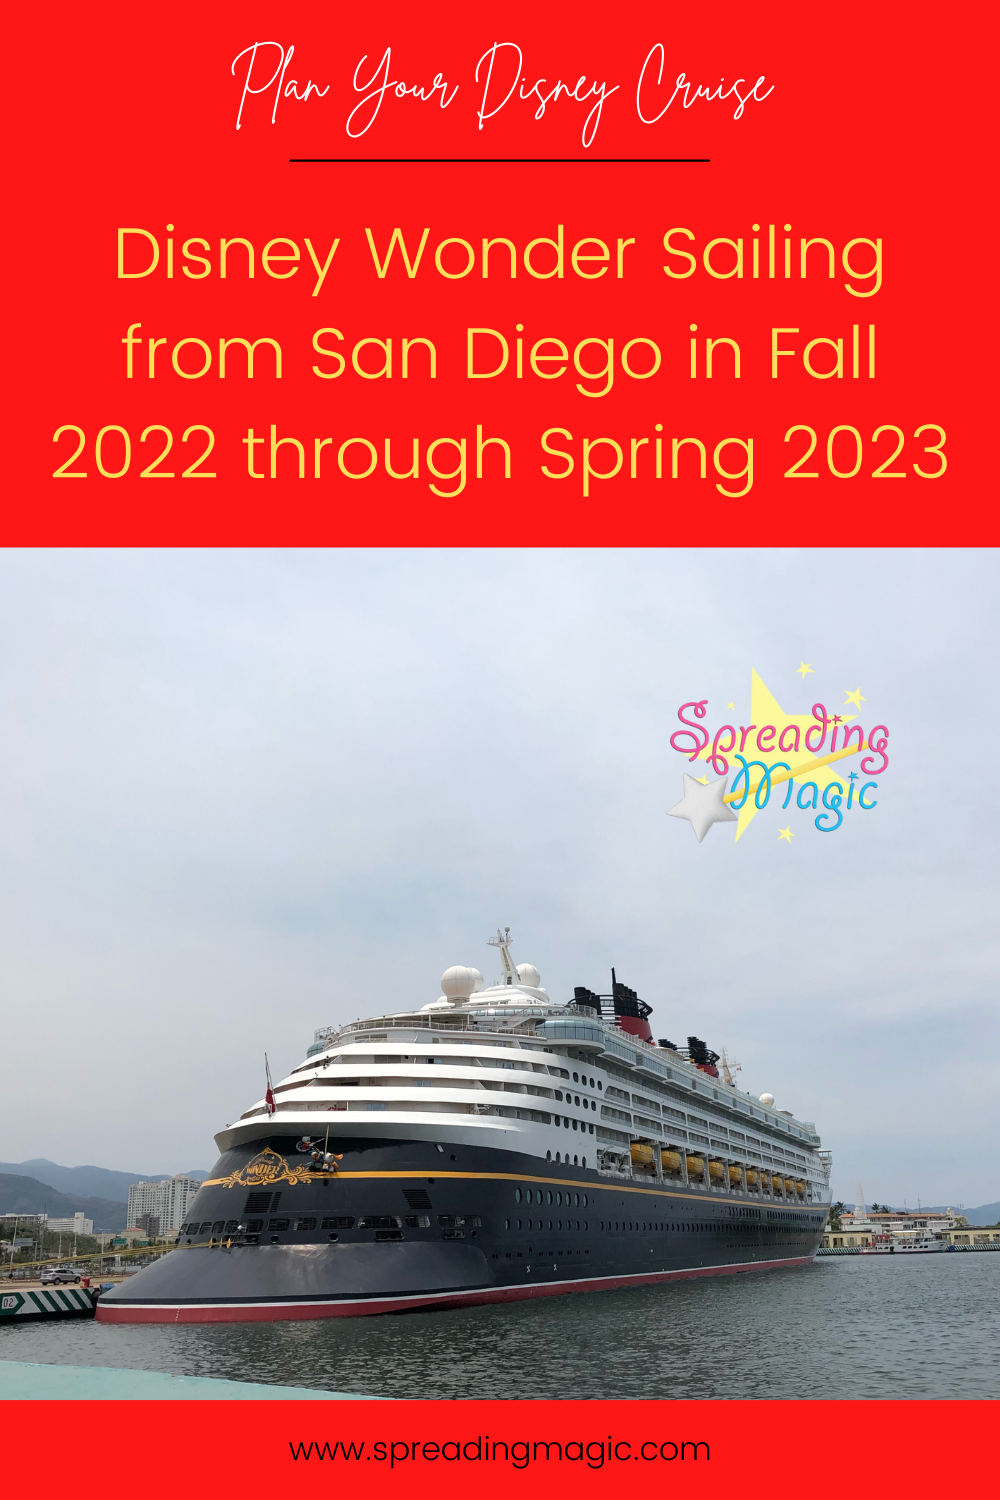 Disney Wonder to Sail from San Diego Fall 2022 through Spring 2023